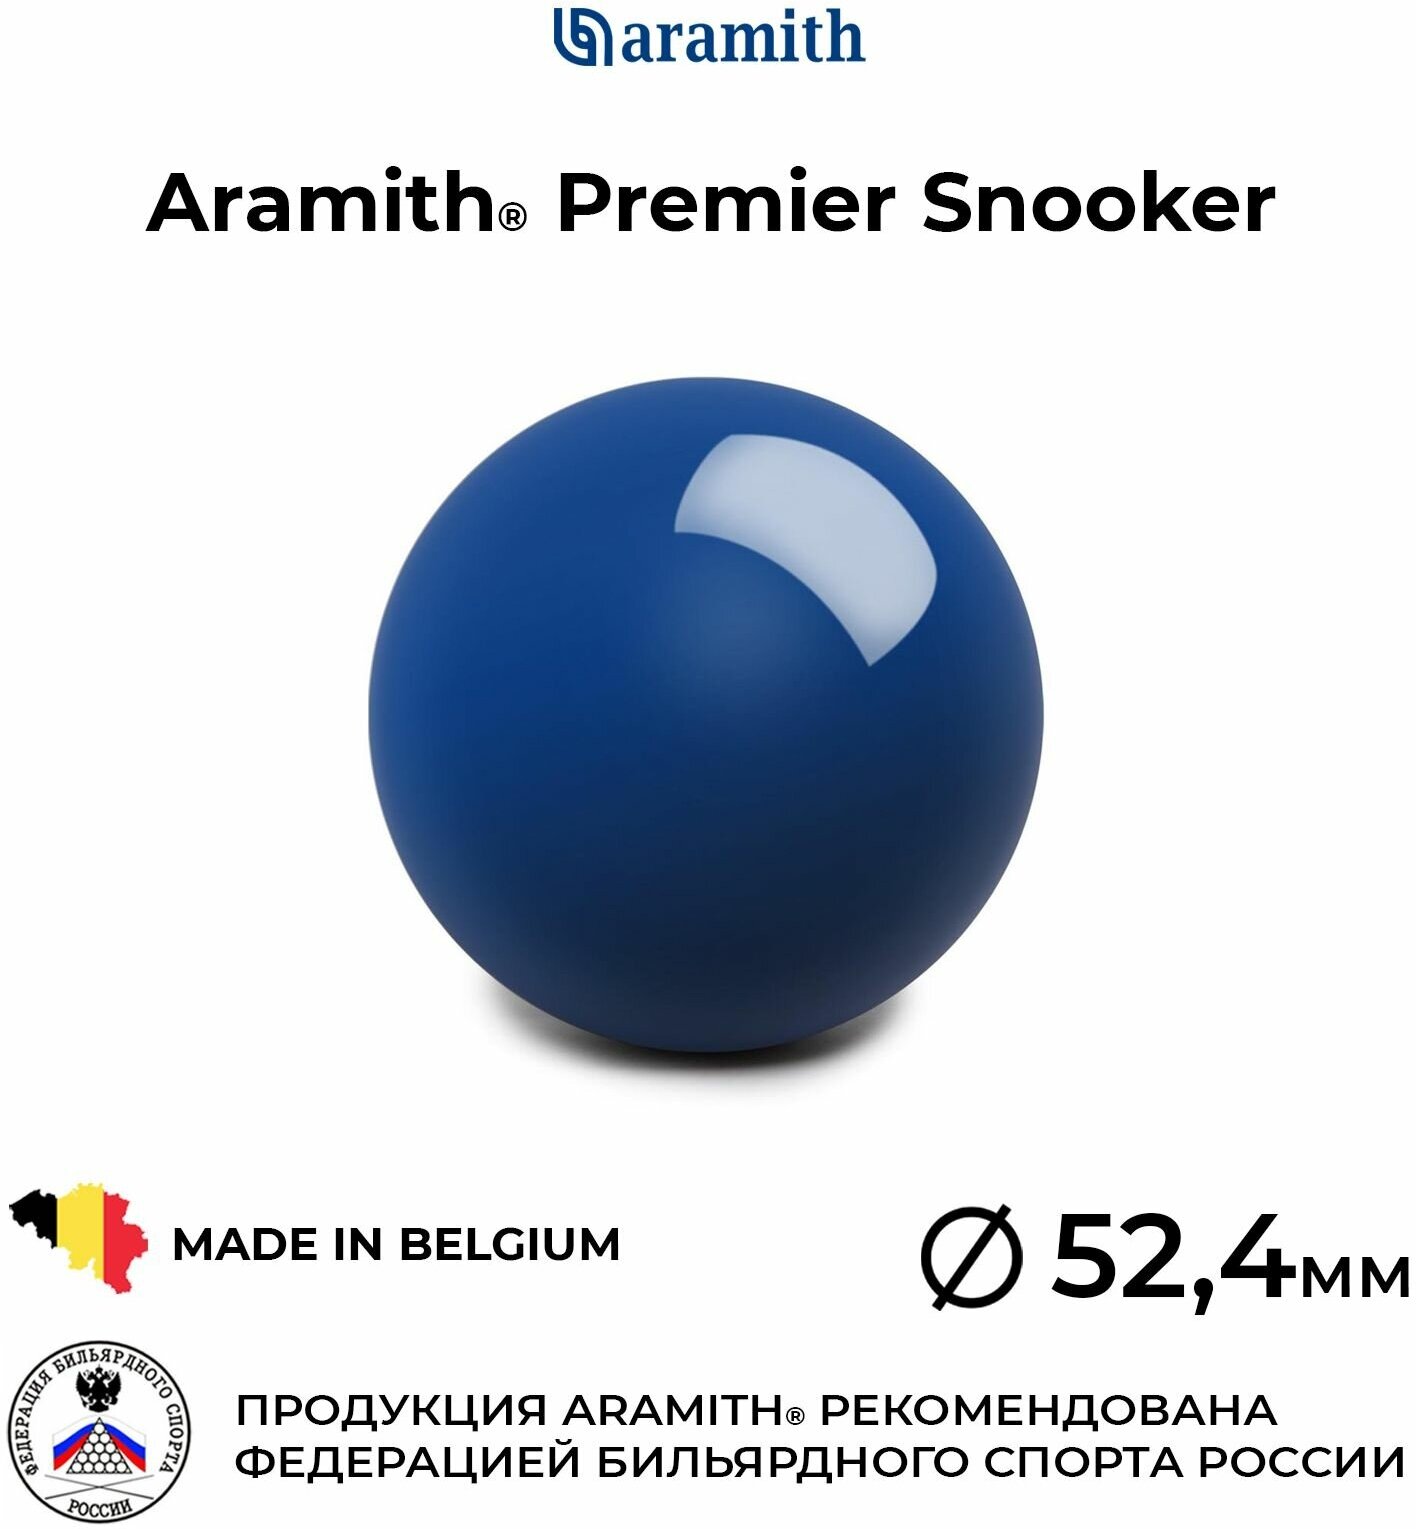 Бильярдный шар 52,4 мм Арамит Премьер Снукер / Aramith Premier Snooker 52,4 мм синий 1 шт.